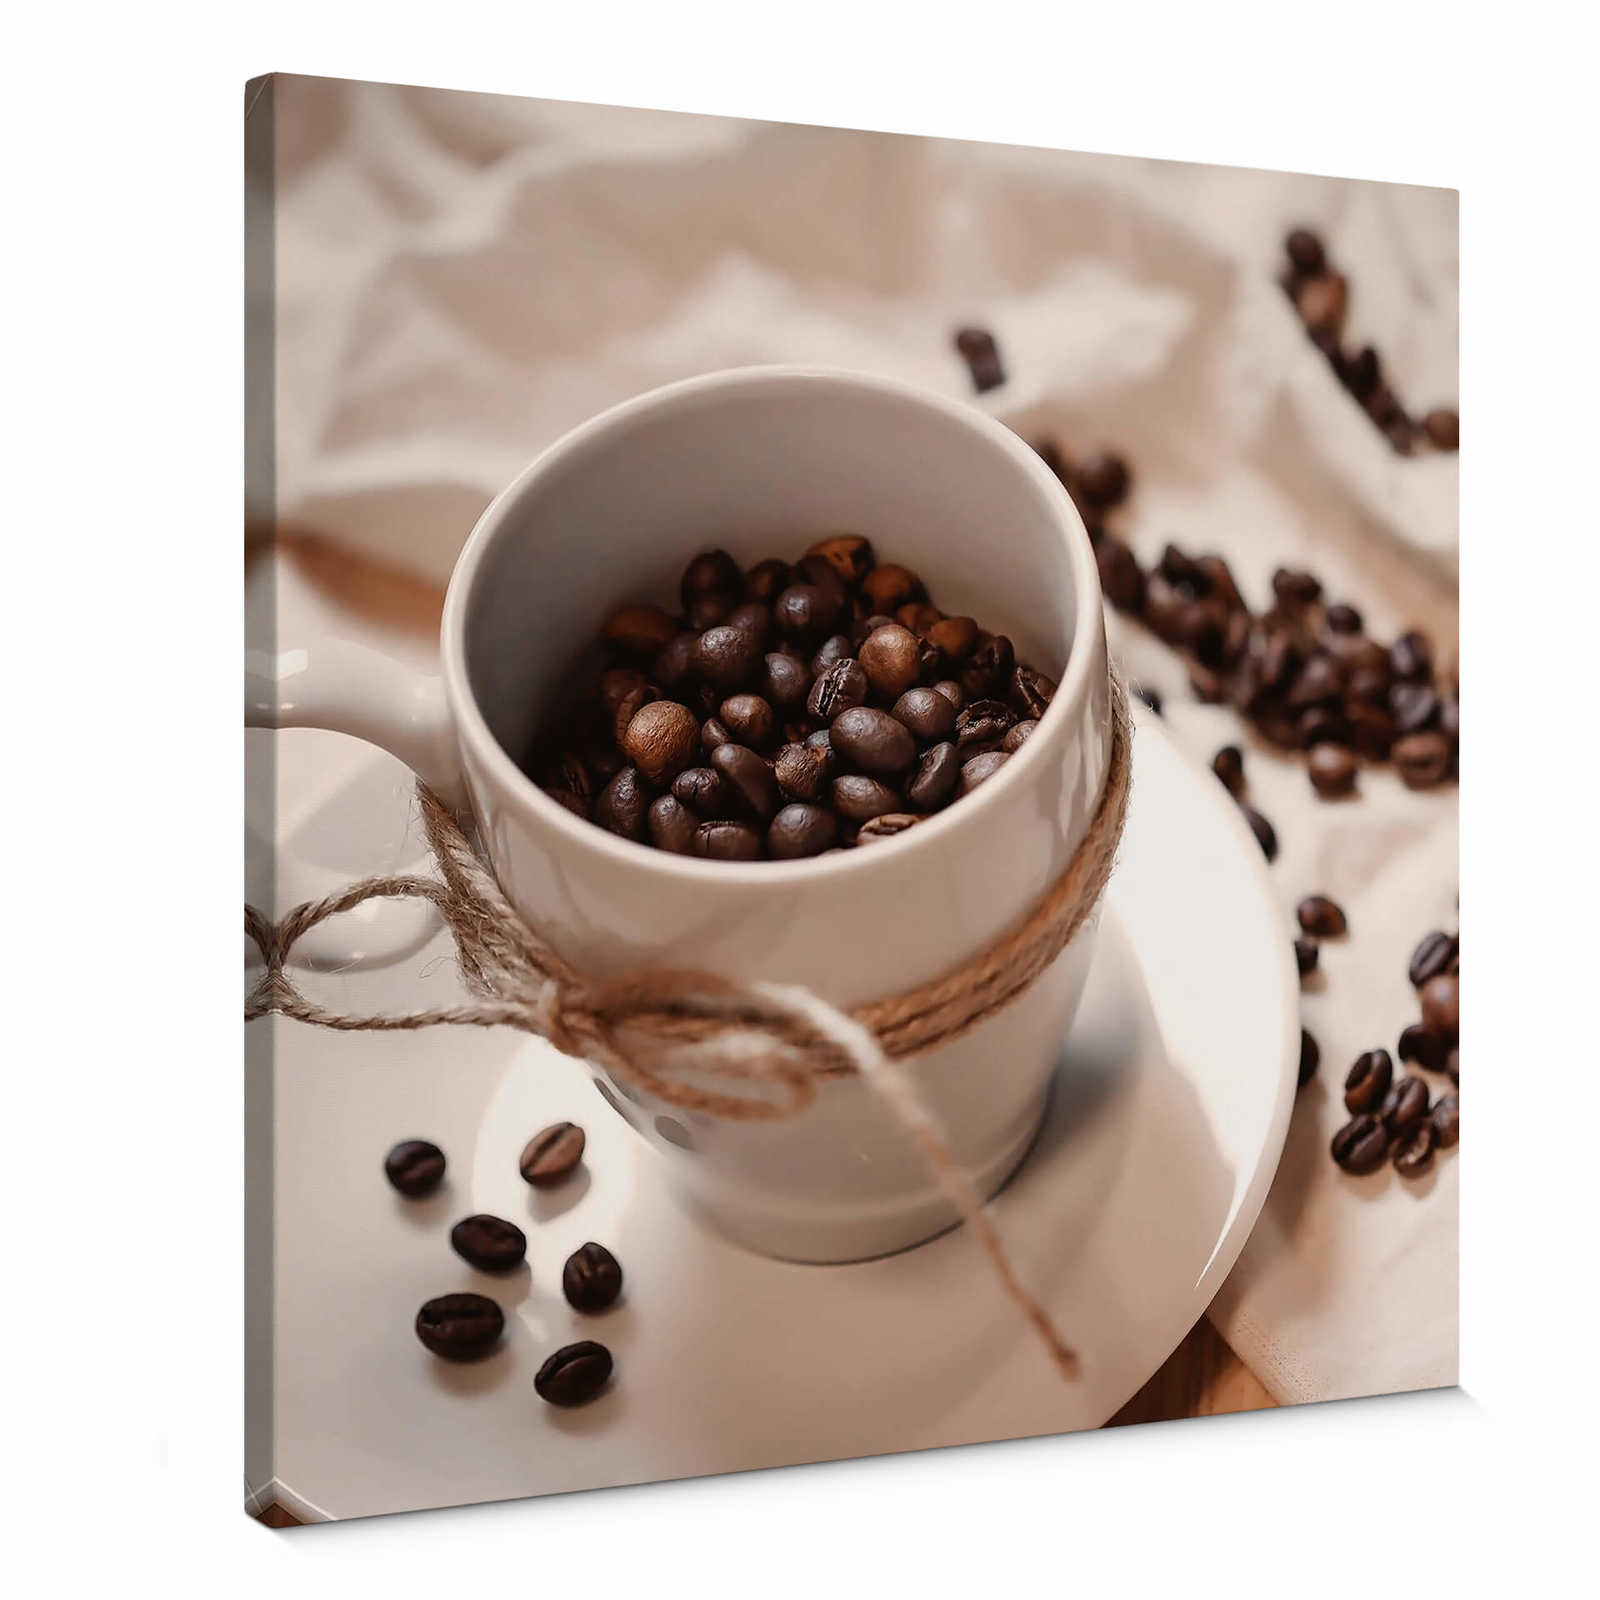         Square canvas print coffee cup, café style
    